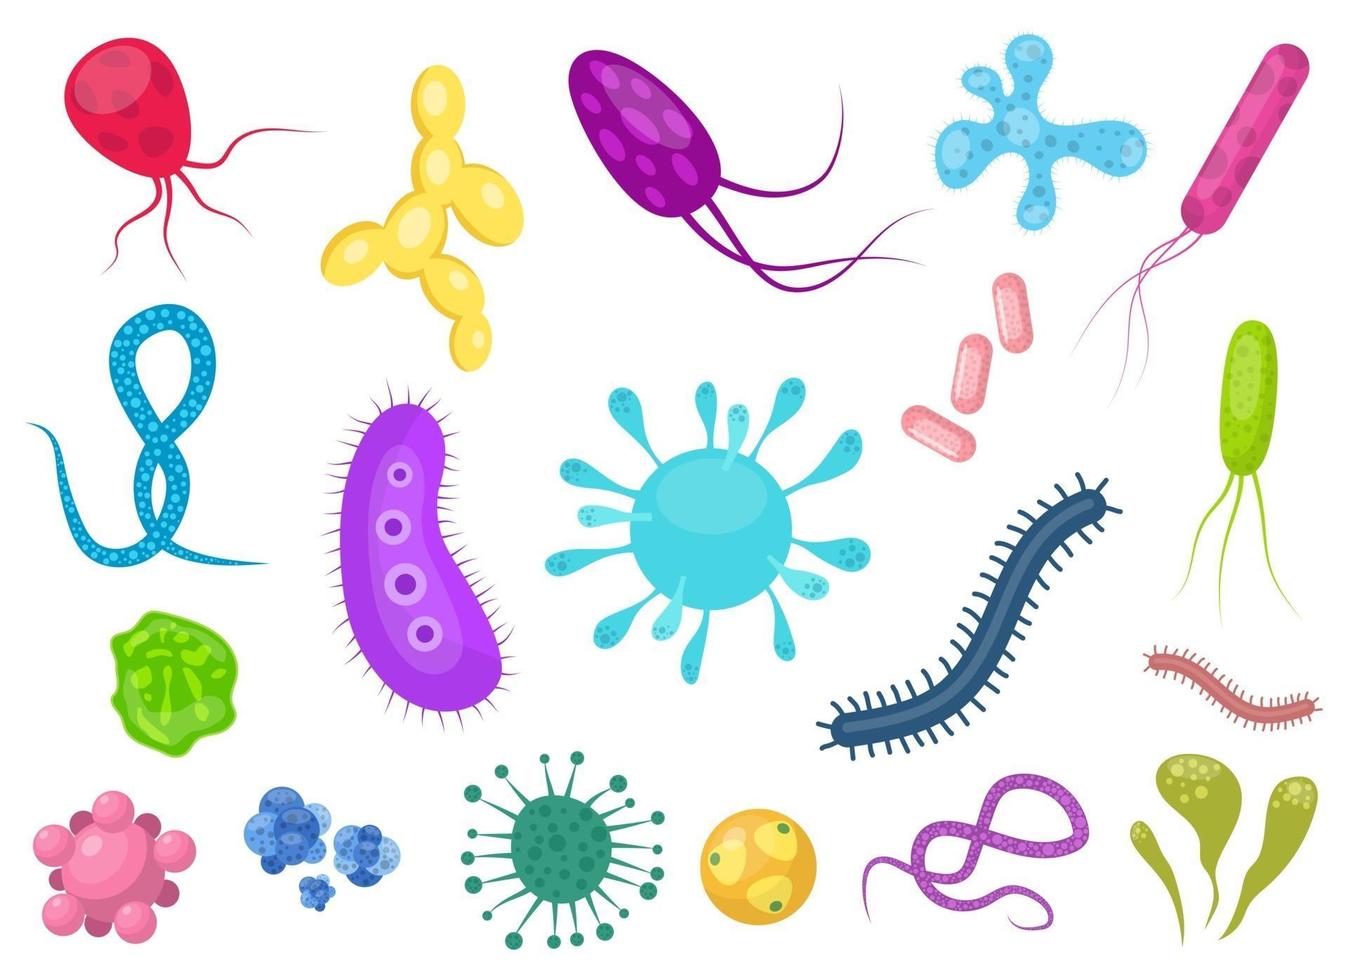 Virus bacteria vector design illustration set isolated on white background